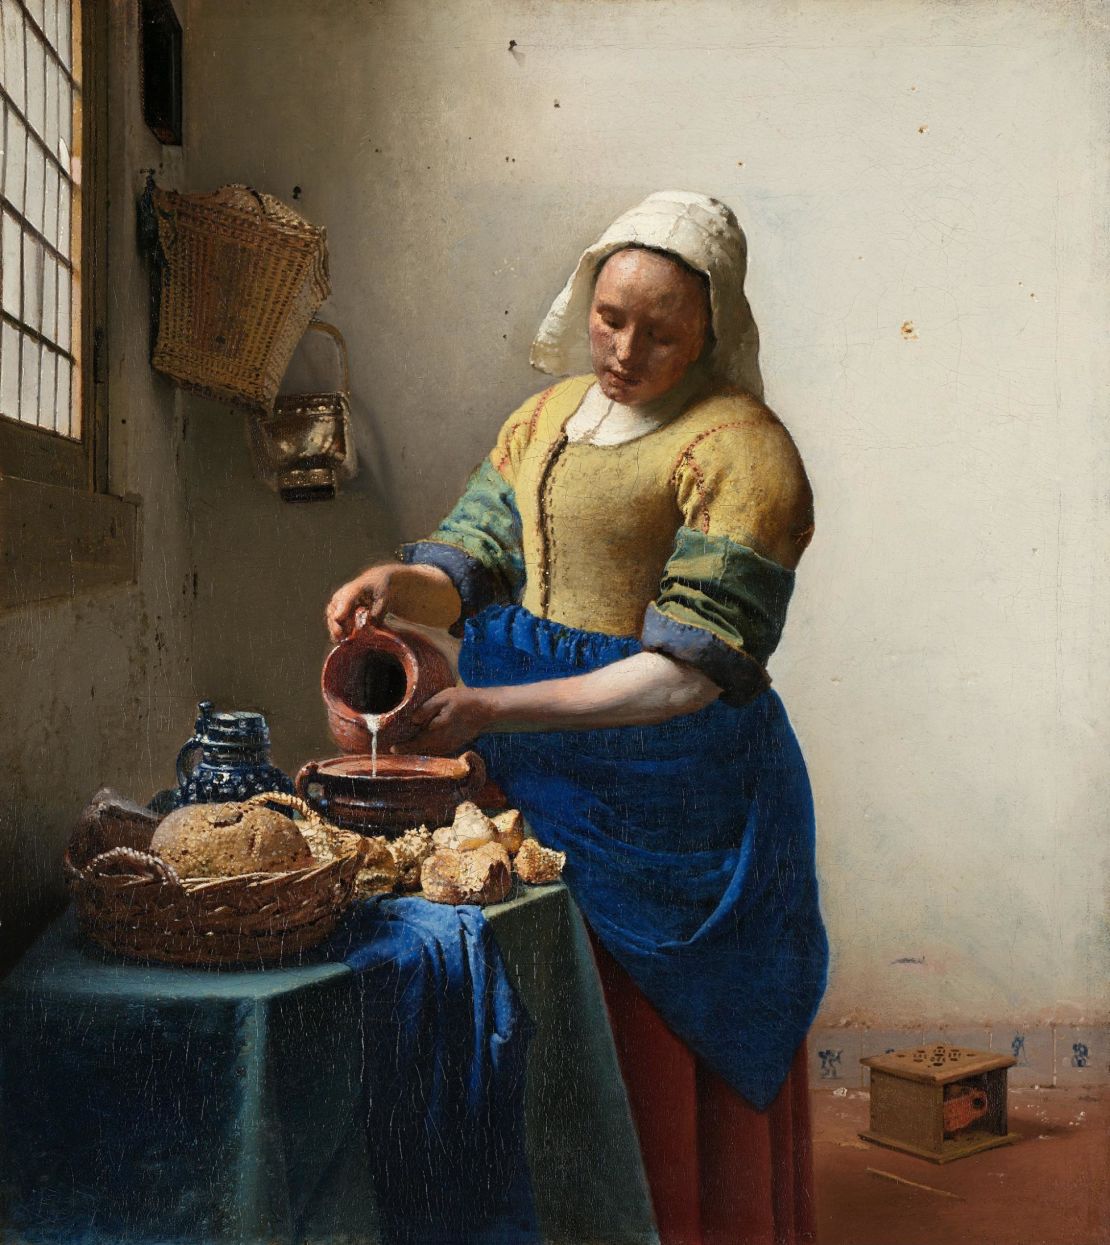 Vermeer's "The Milkmaid" (1657-1658) 